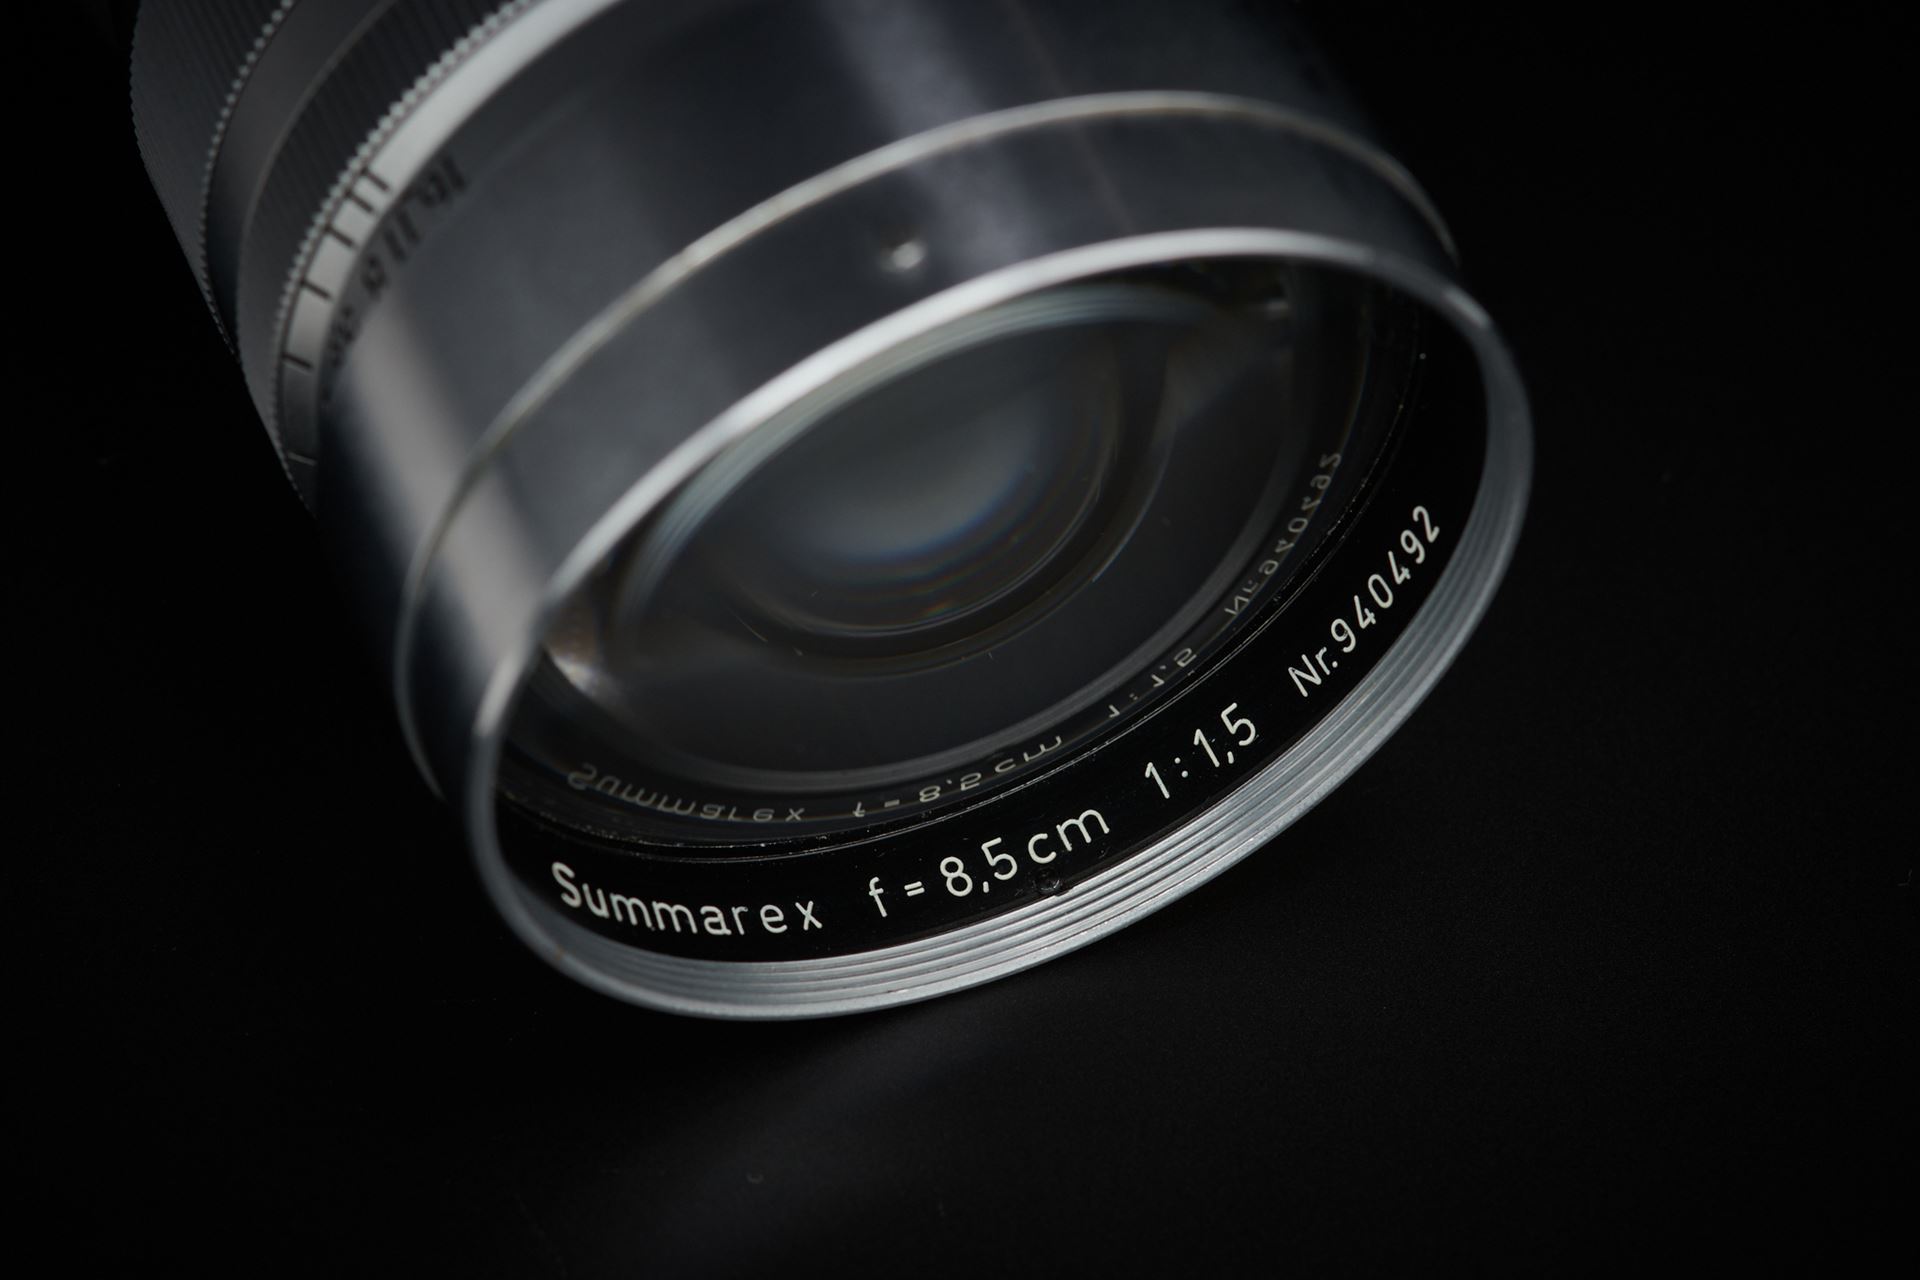 Picture of leica summarex 8.5cm f/1.5 silver screw ltm